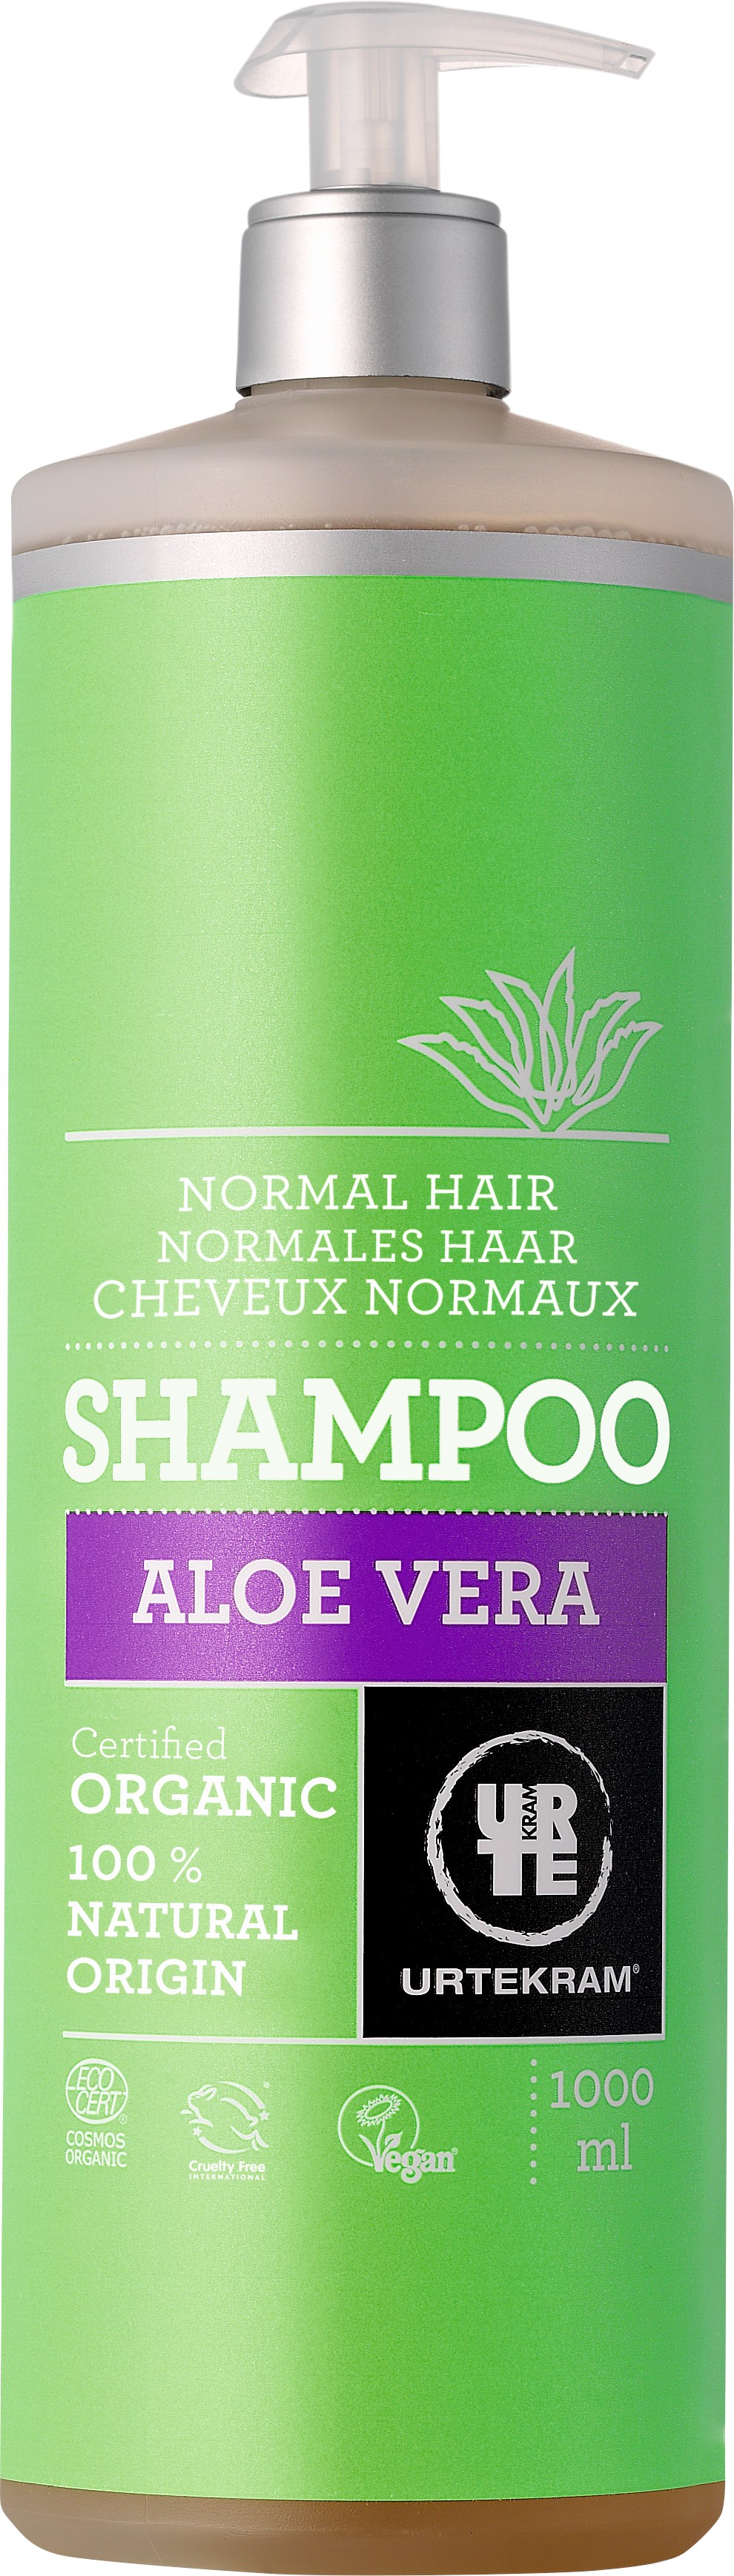 Urtekram Aloe Vera Shampoo Normal 1000ml